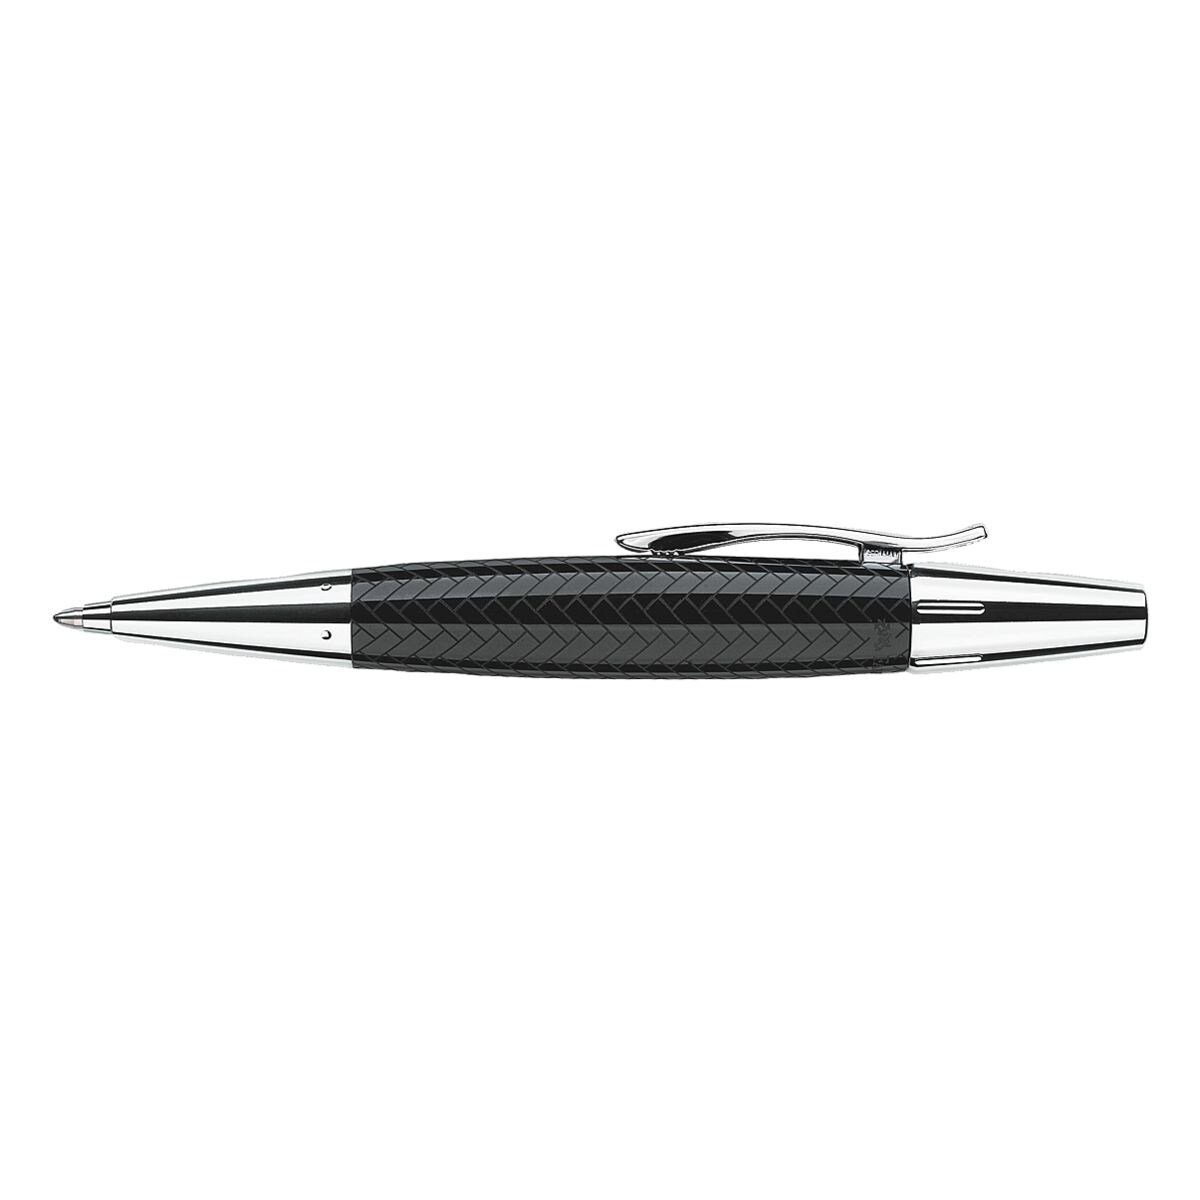 Faber-Castell Kugelschreiber e-motion Edelharz Parkett, mit gelasertem Parkett-Desin, dokumentenecht, Strichstärke 0,6 mm schwarz/silberfarben